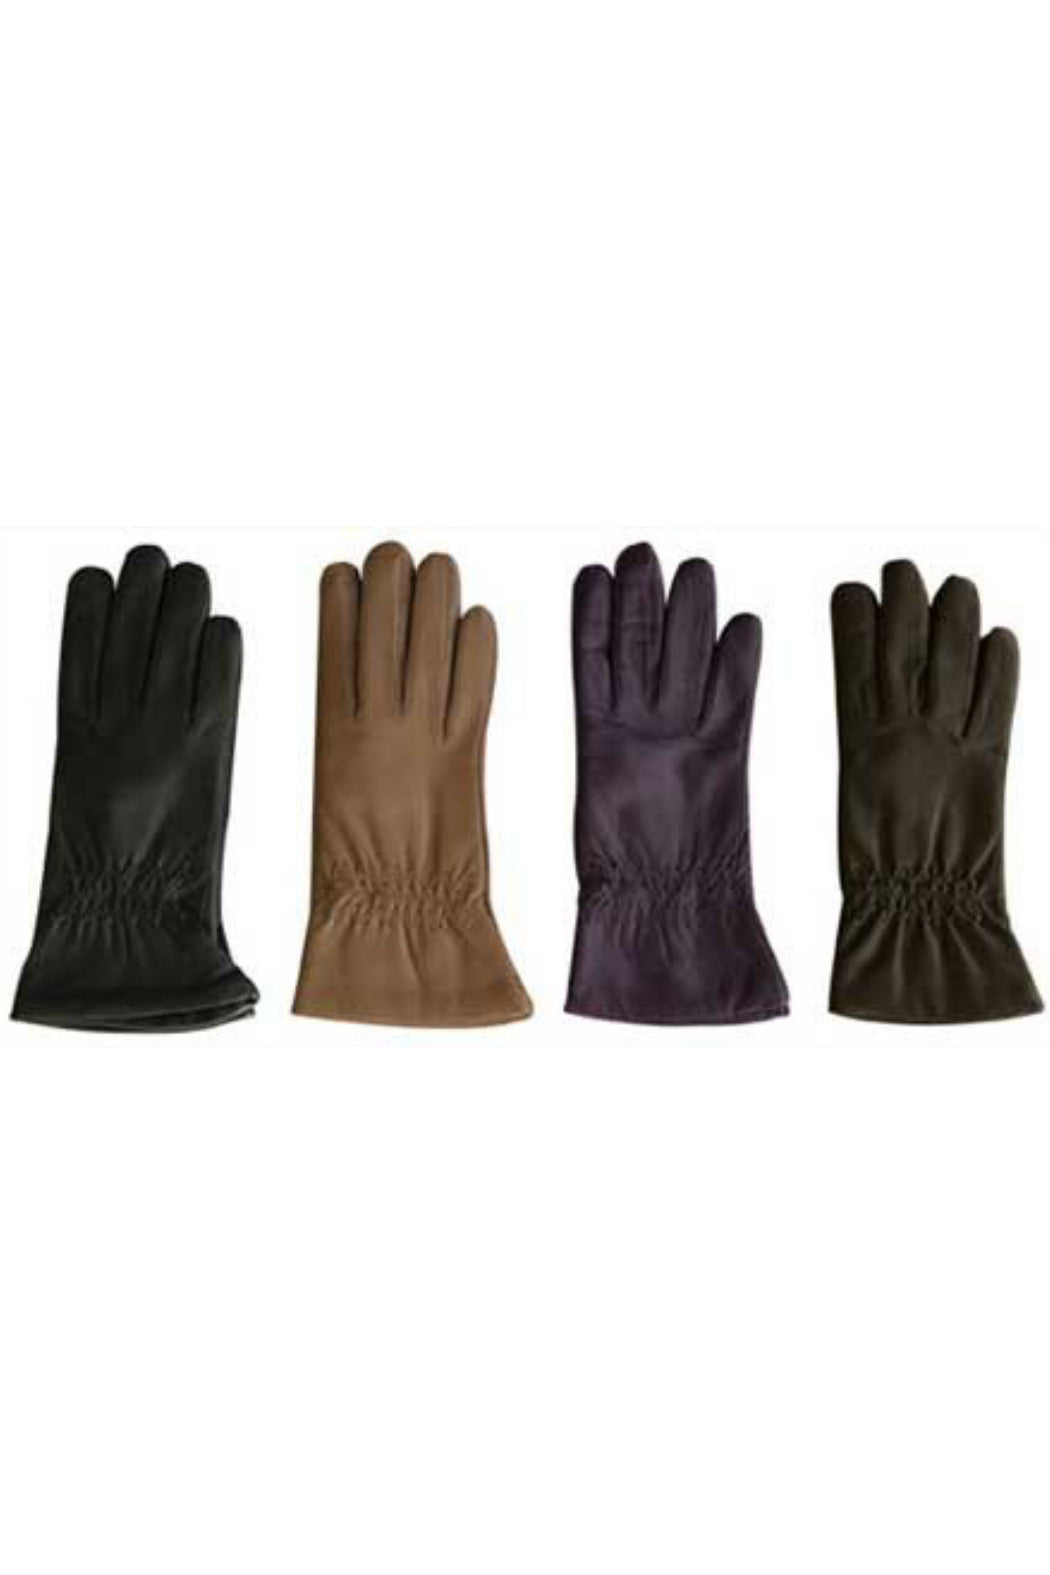 Albee 9720 Glove